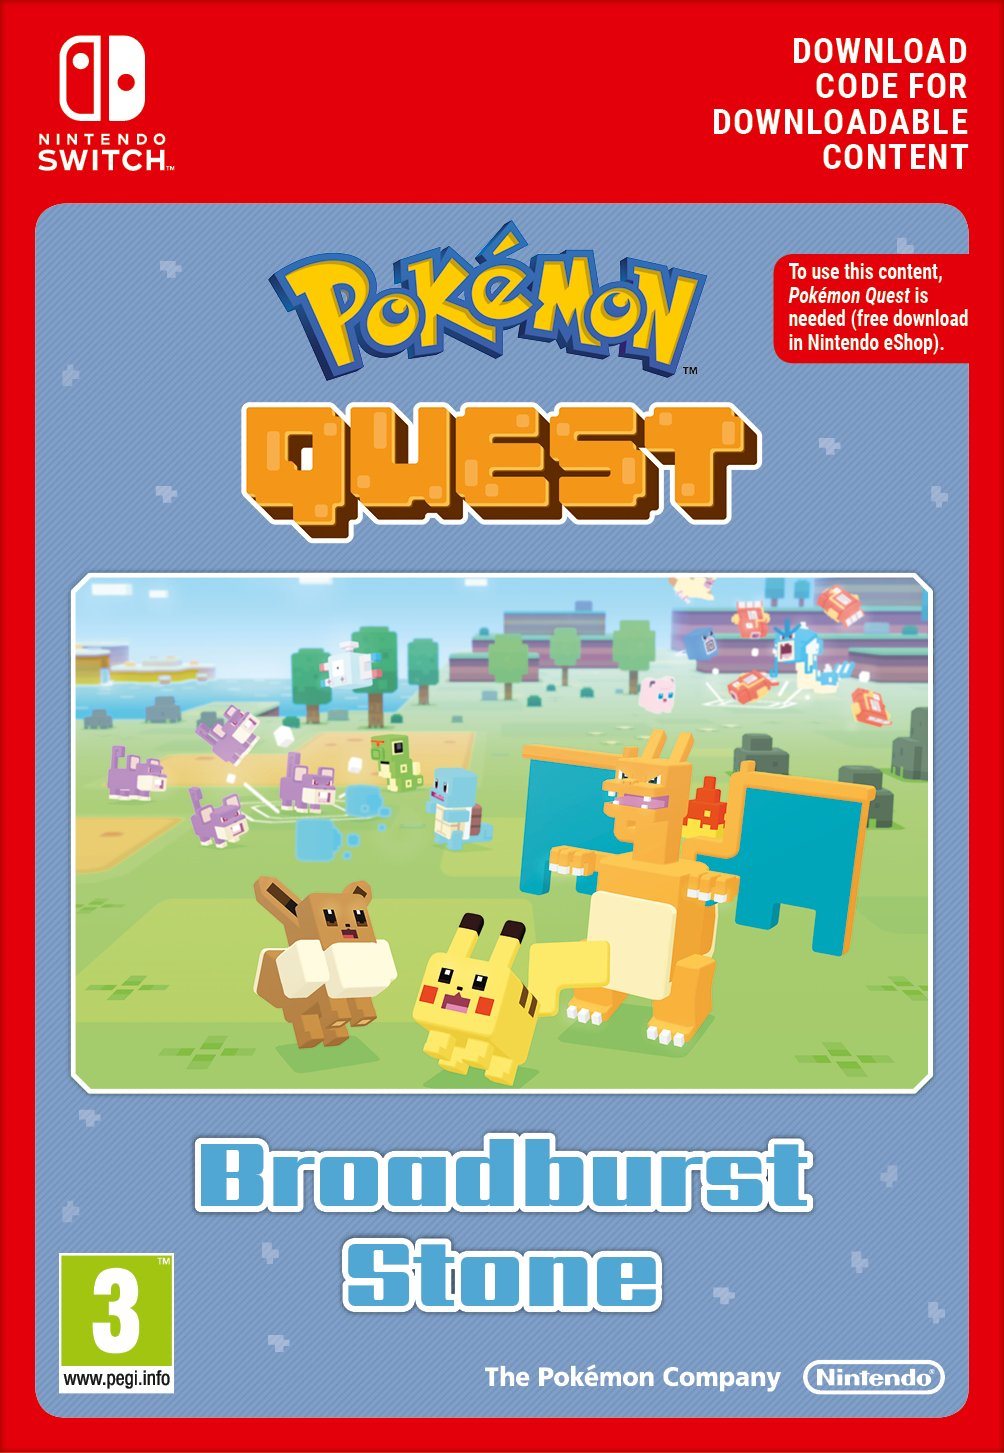 Pokémon Quest Broadburst Stone DLC - Nintendo Switch Digital